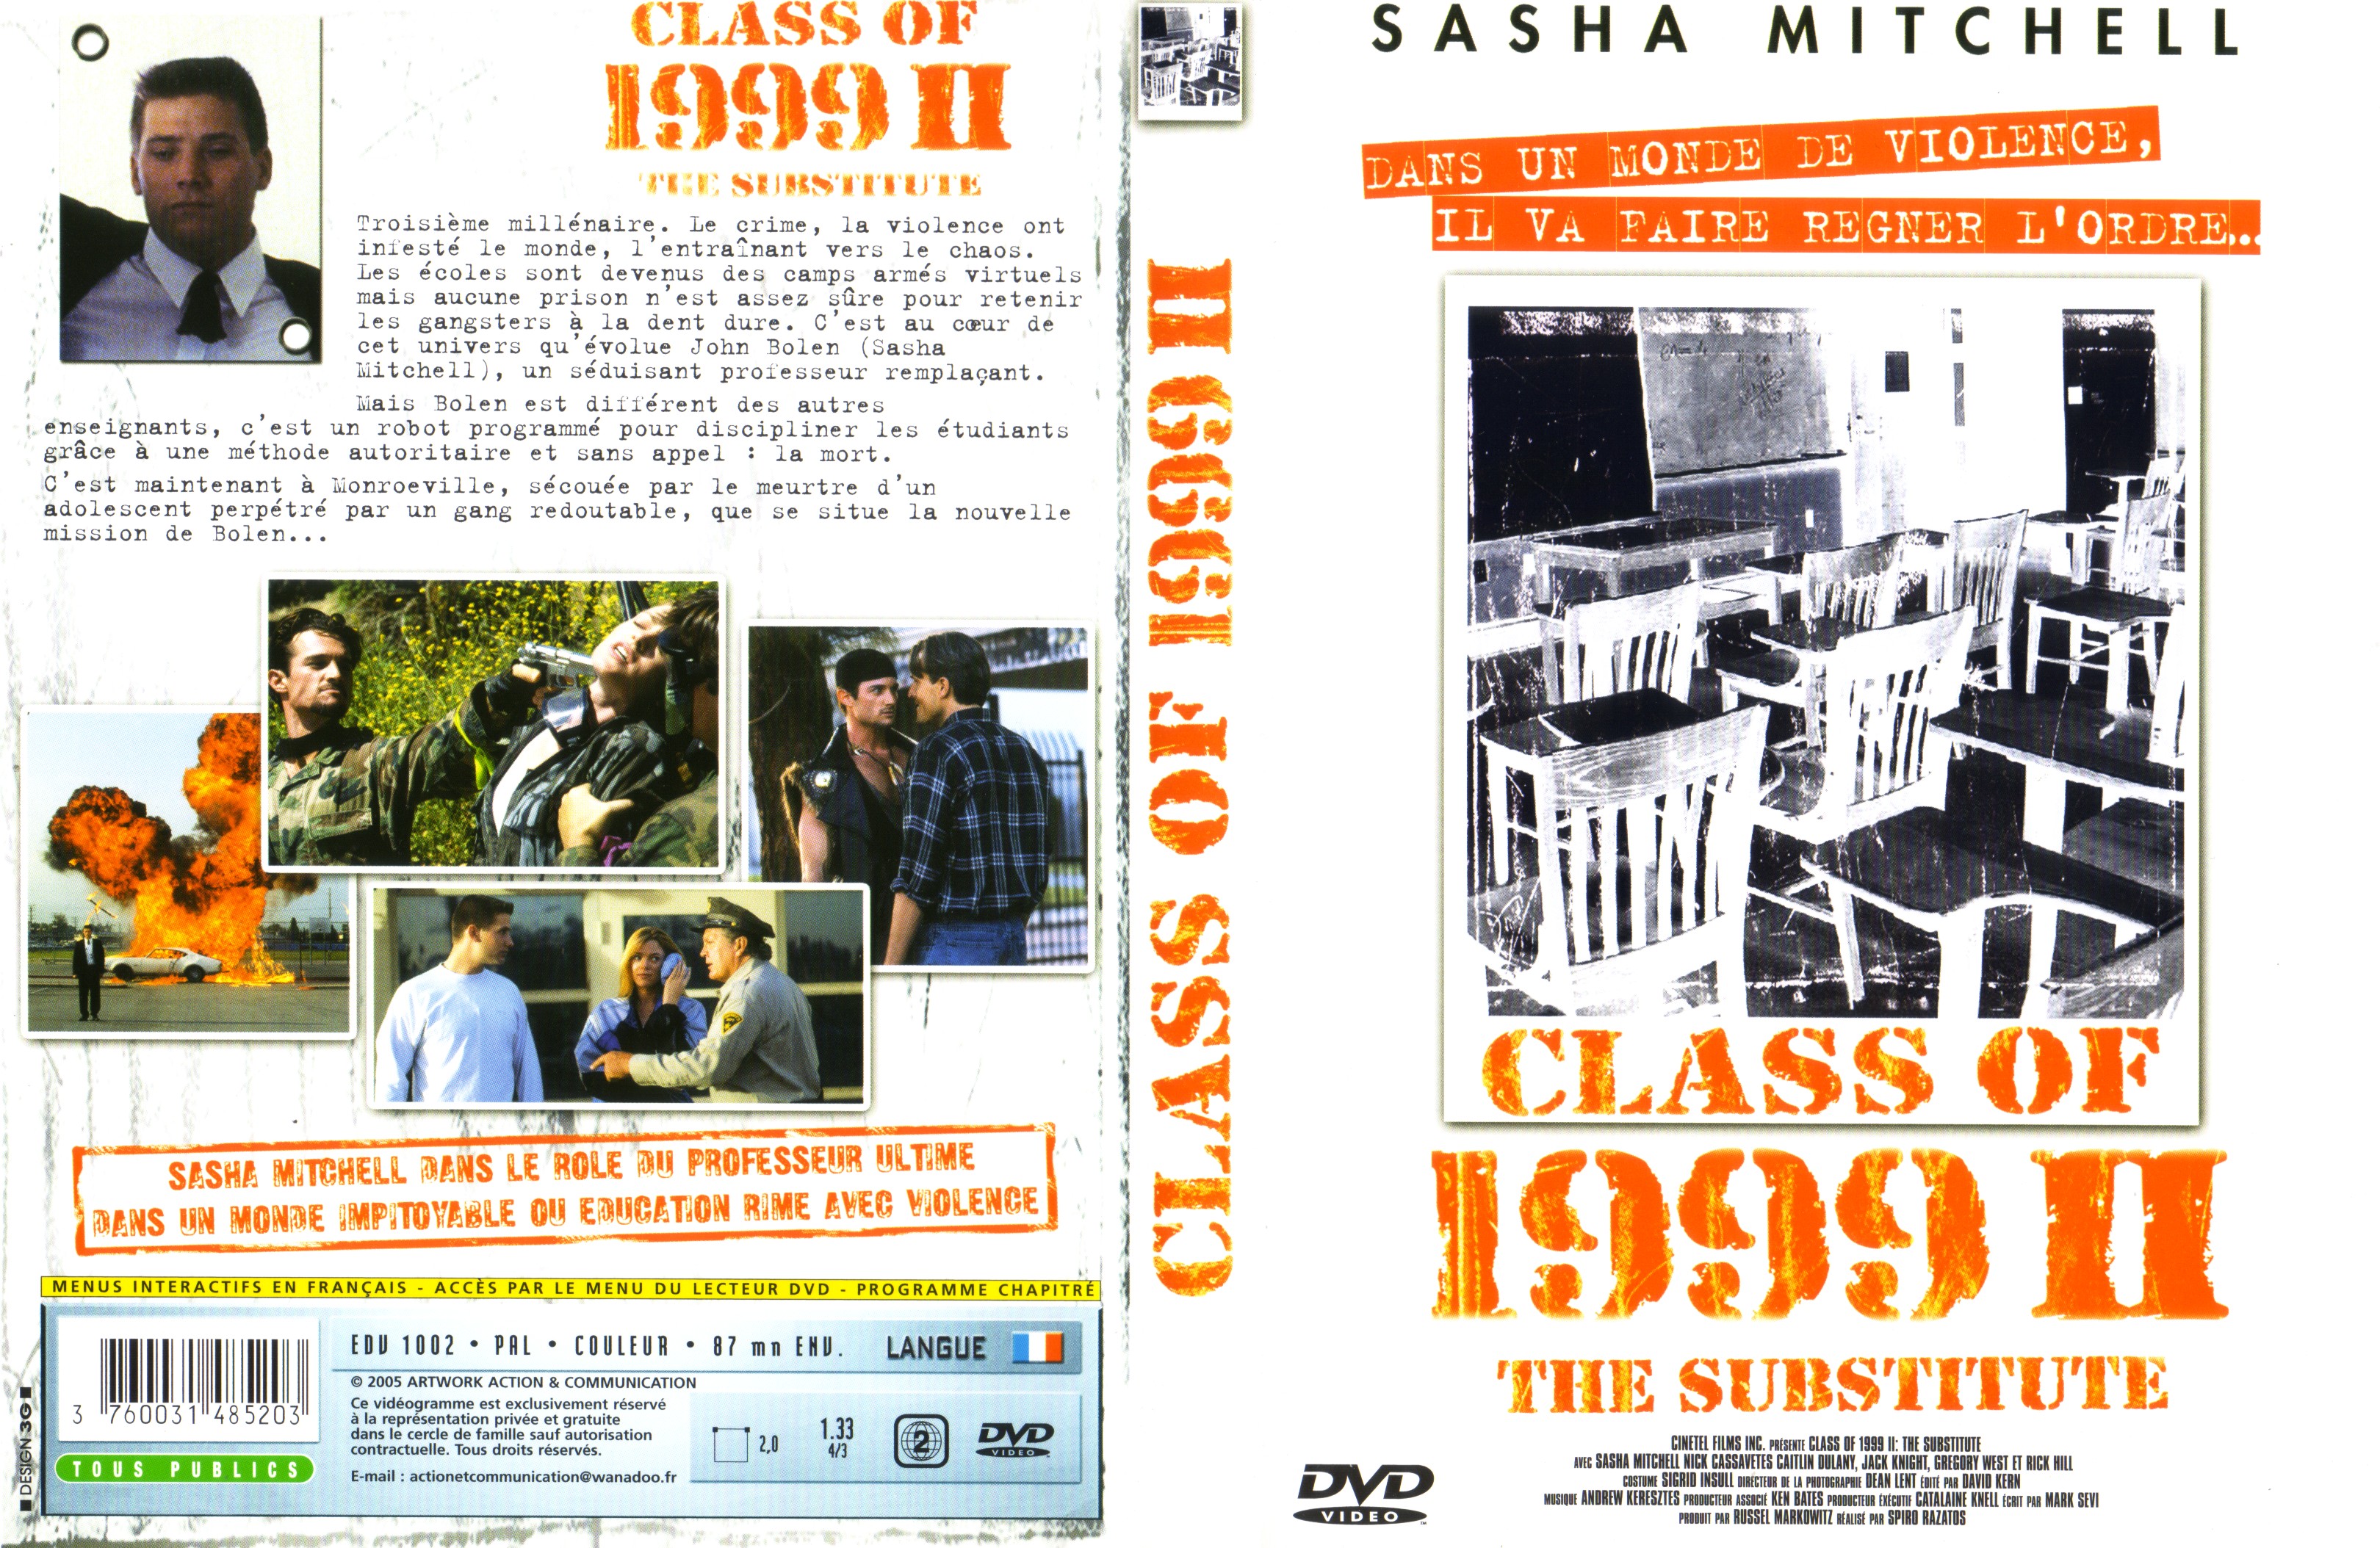 Jaquette DVD Class of 1999 2